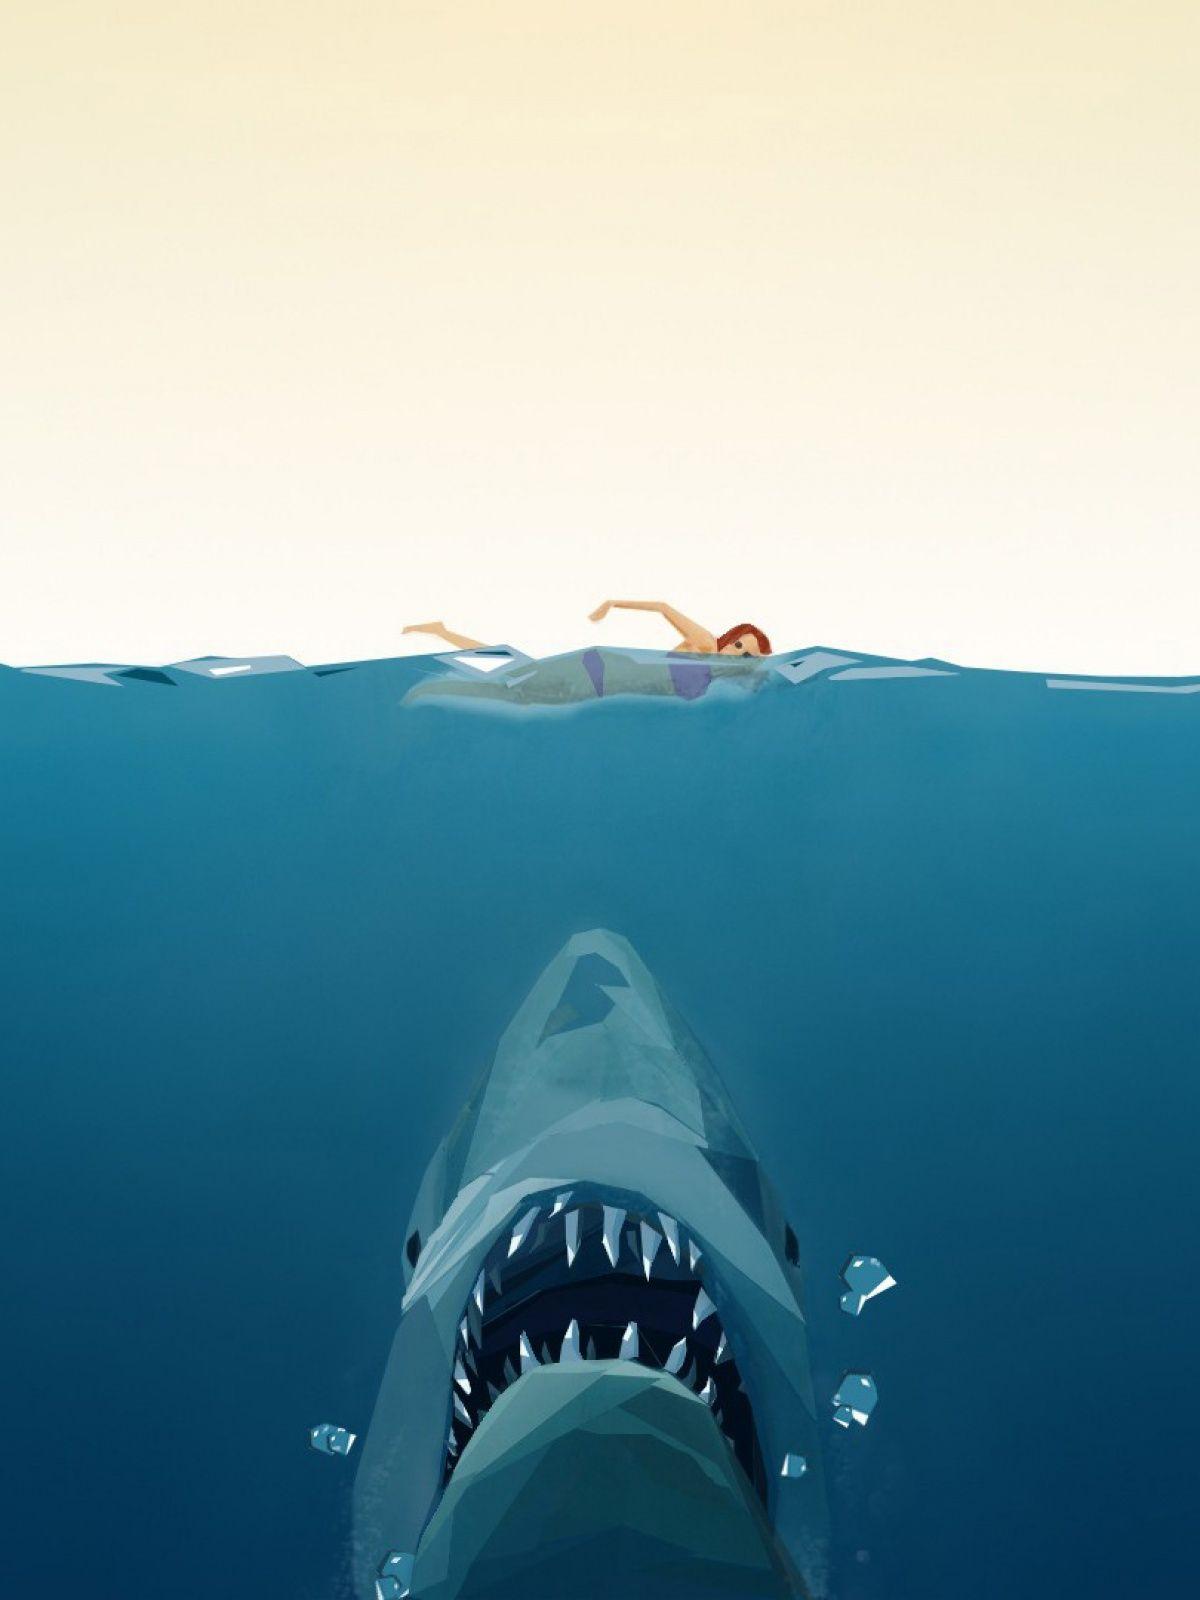 Shark Attack Swimmer Cartoon Android Wallpaper free download